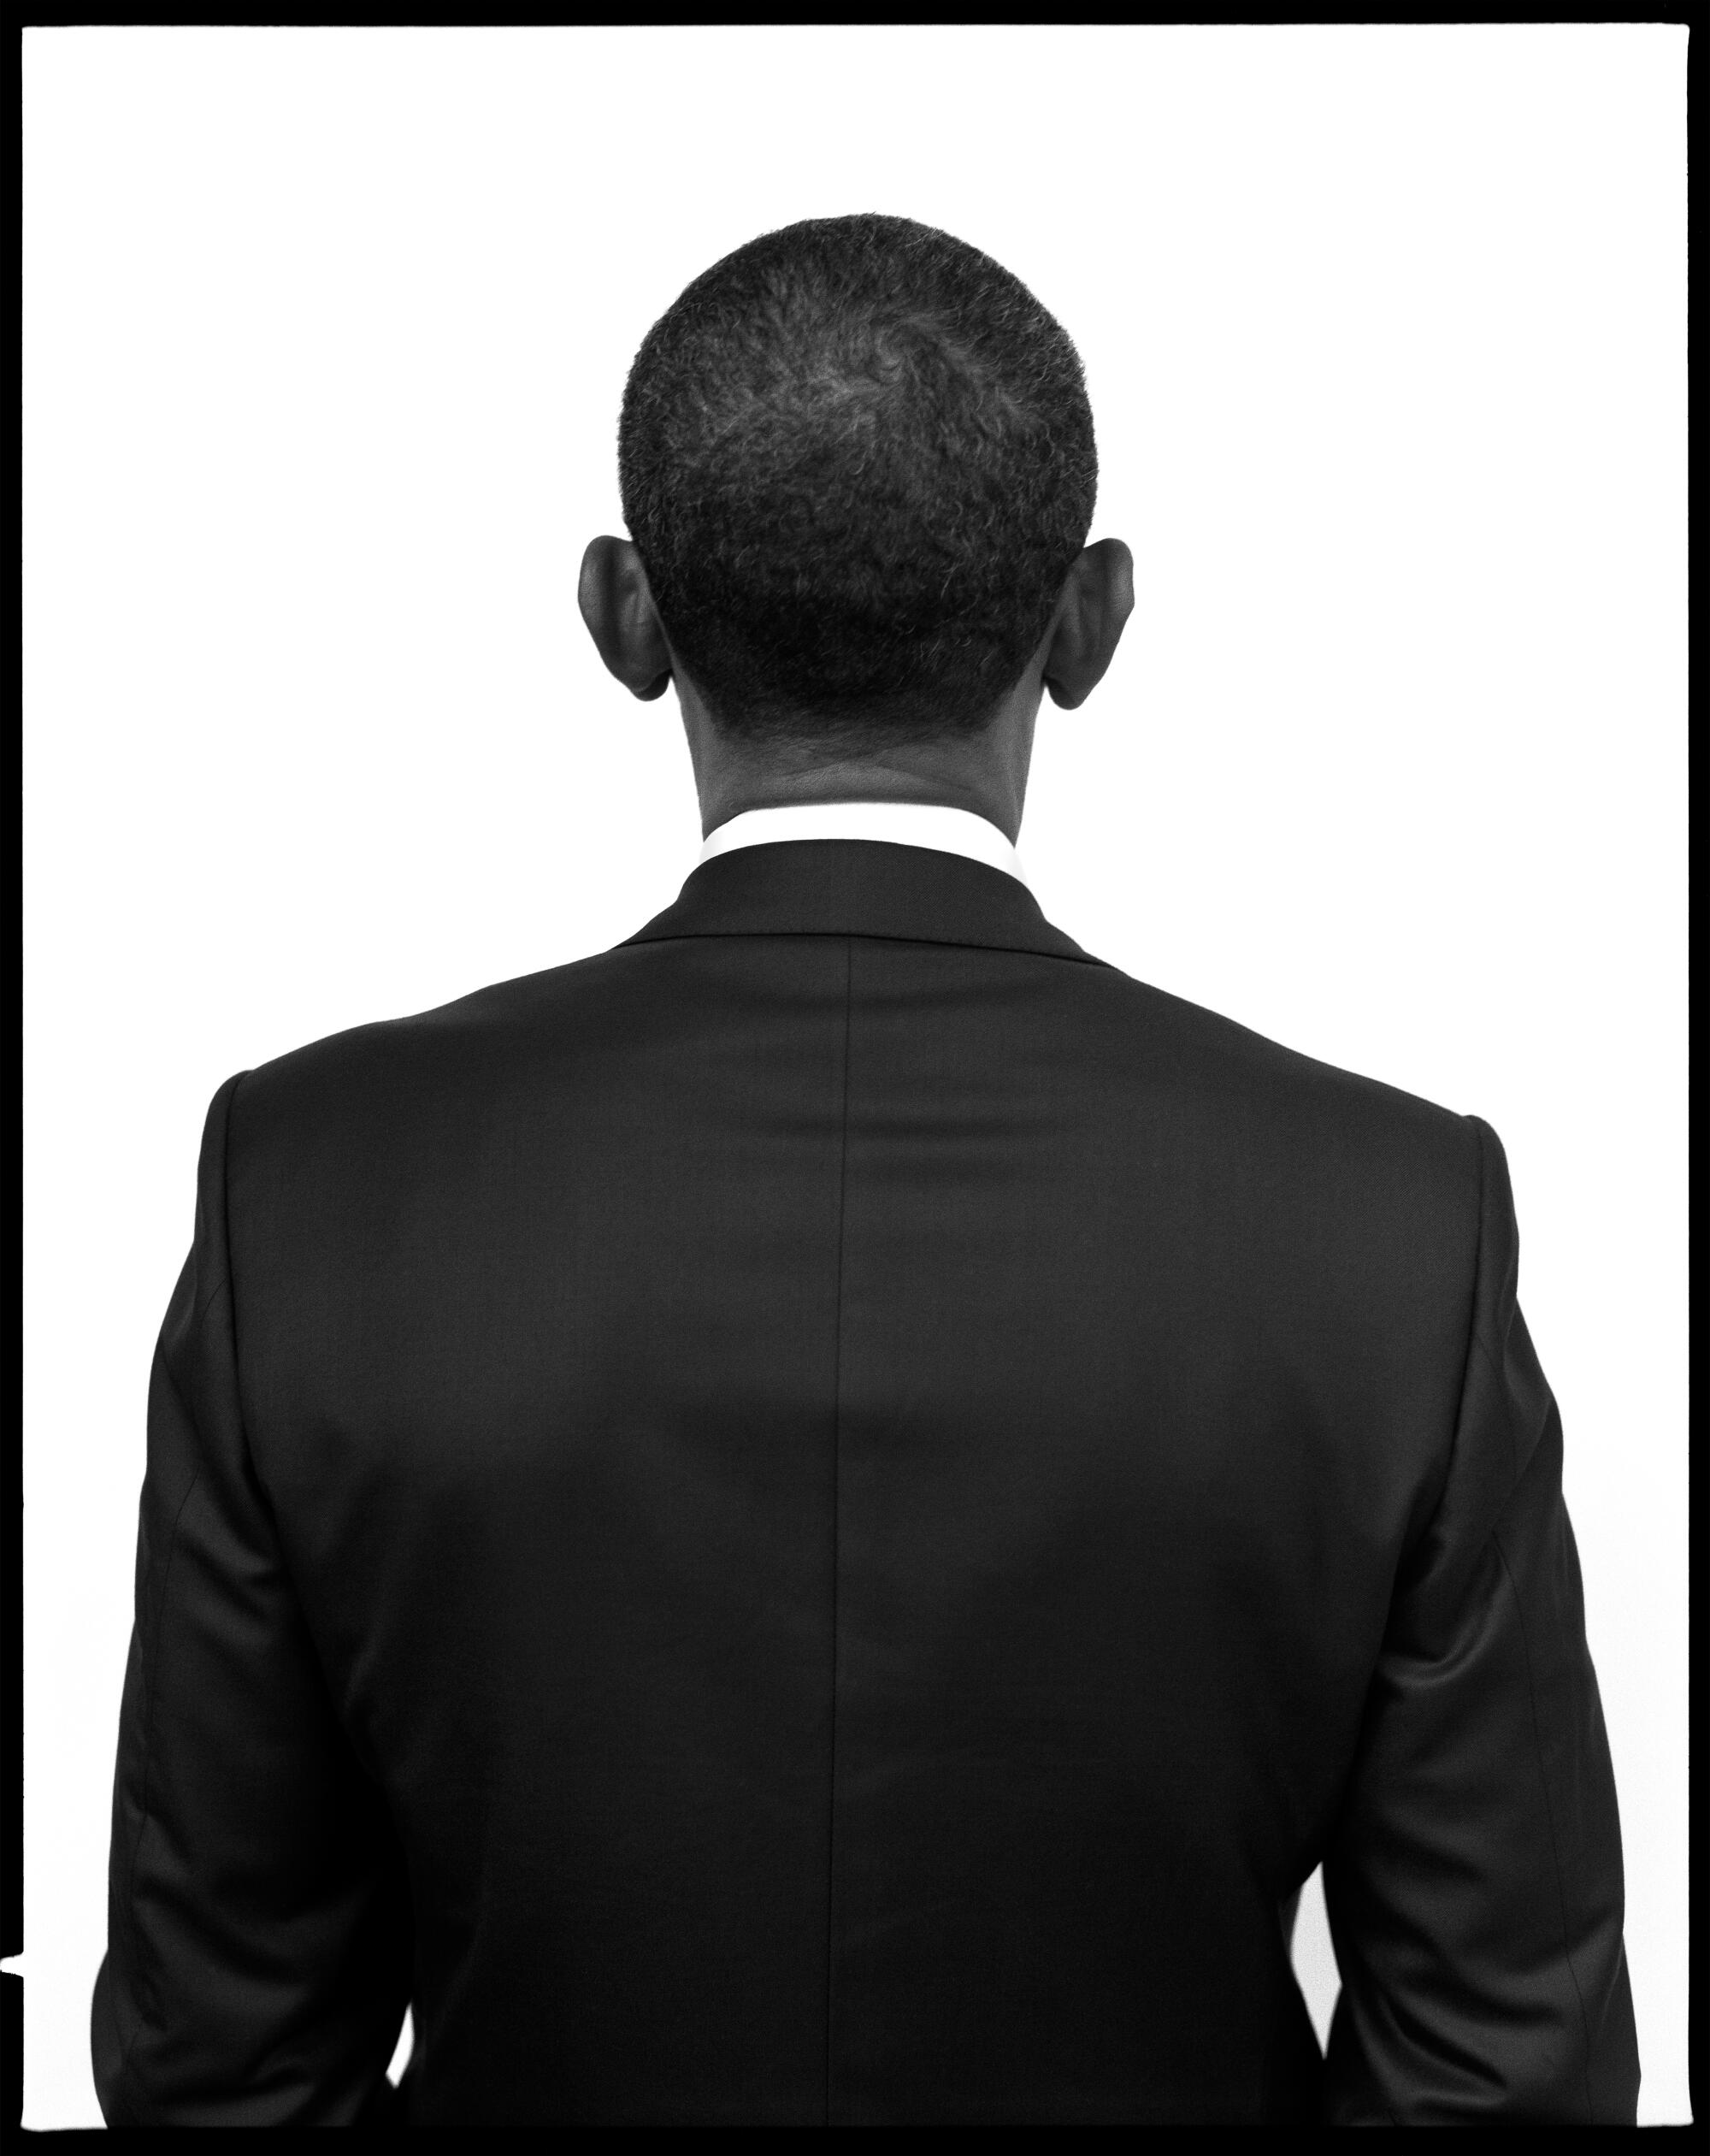 Mark Seliger's "Barack Obama, Washington, D.C., 2010."